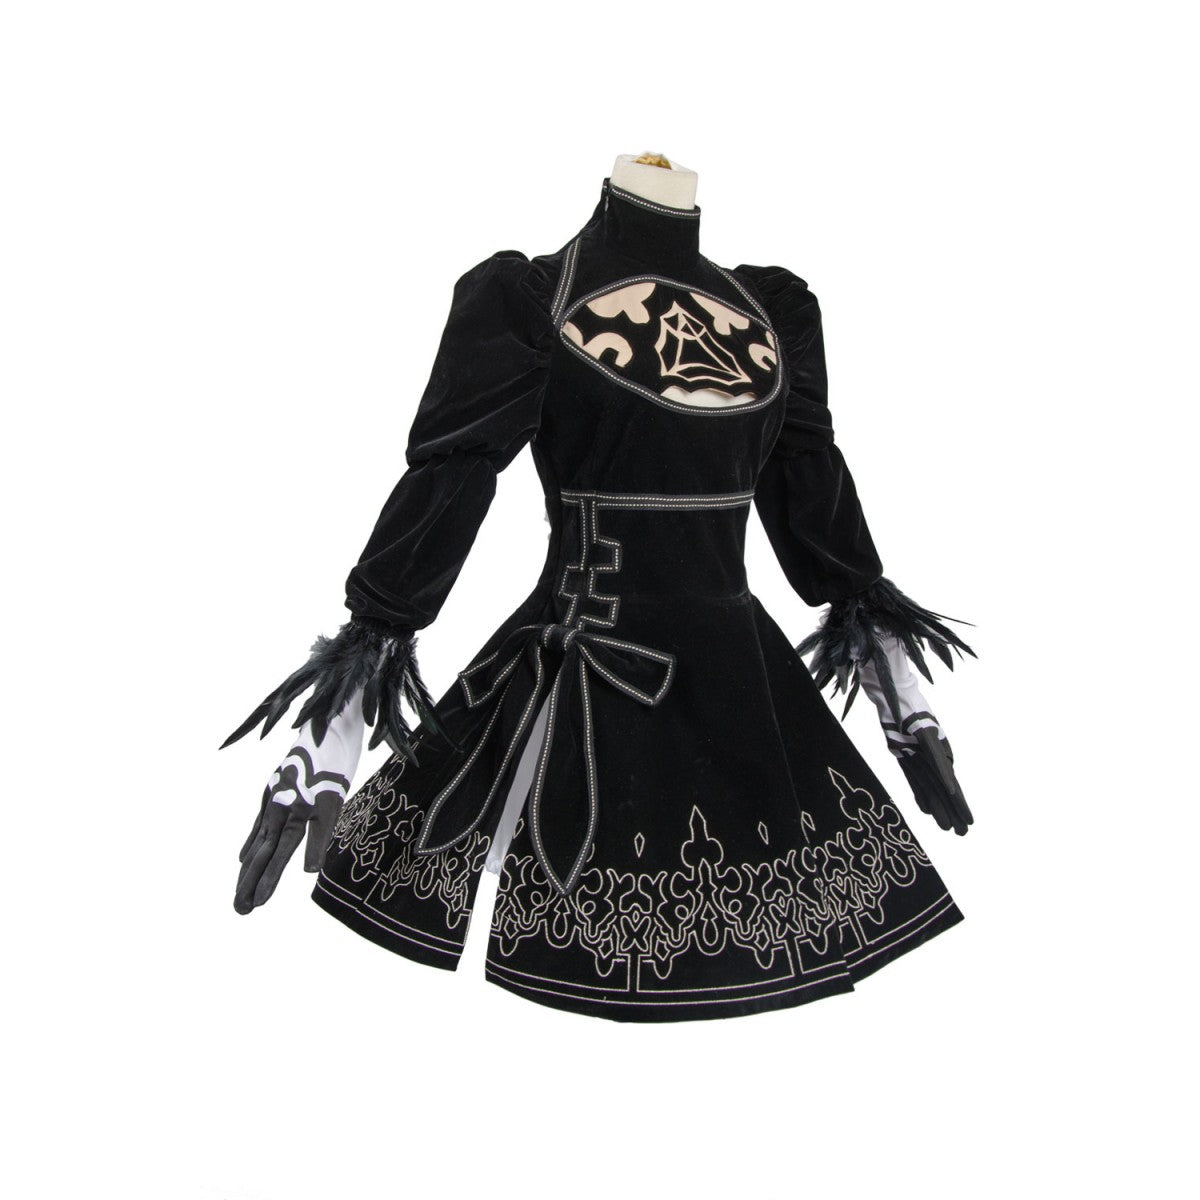 NieR:Automata 2B costume Black Dress Outfits